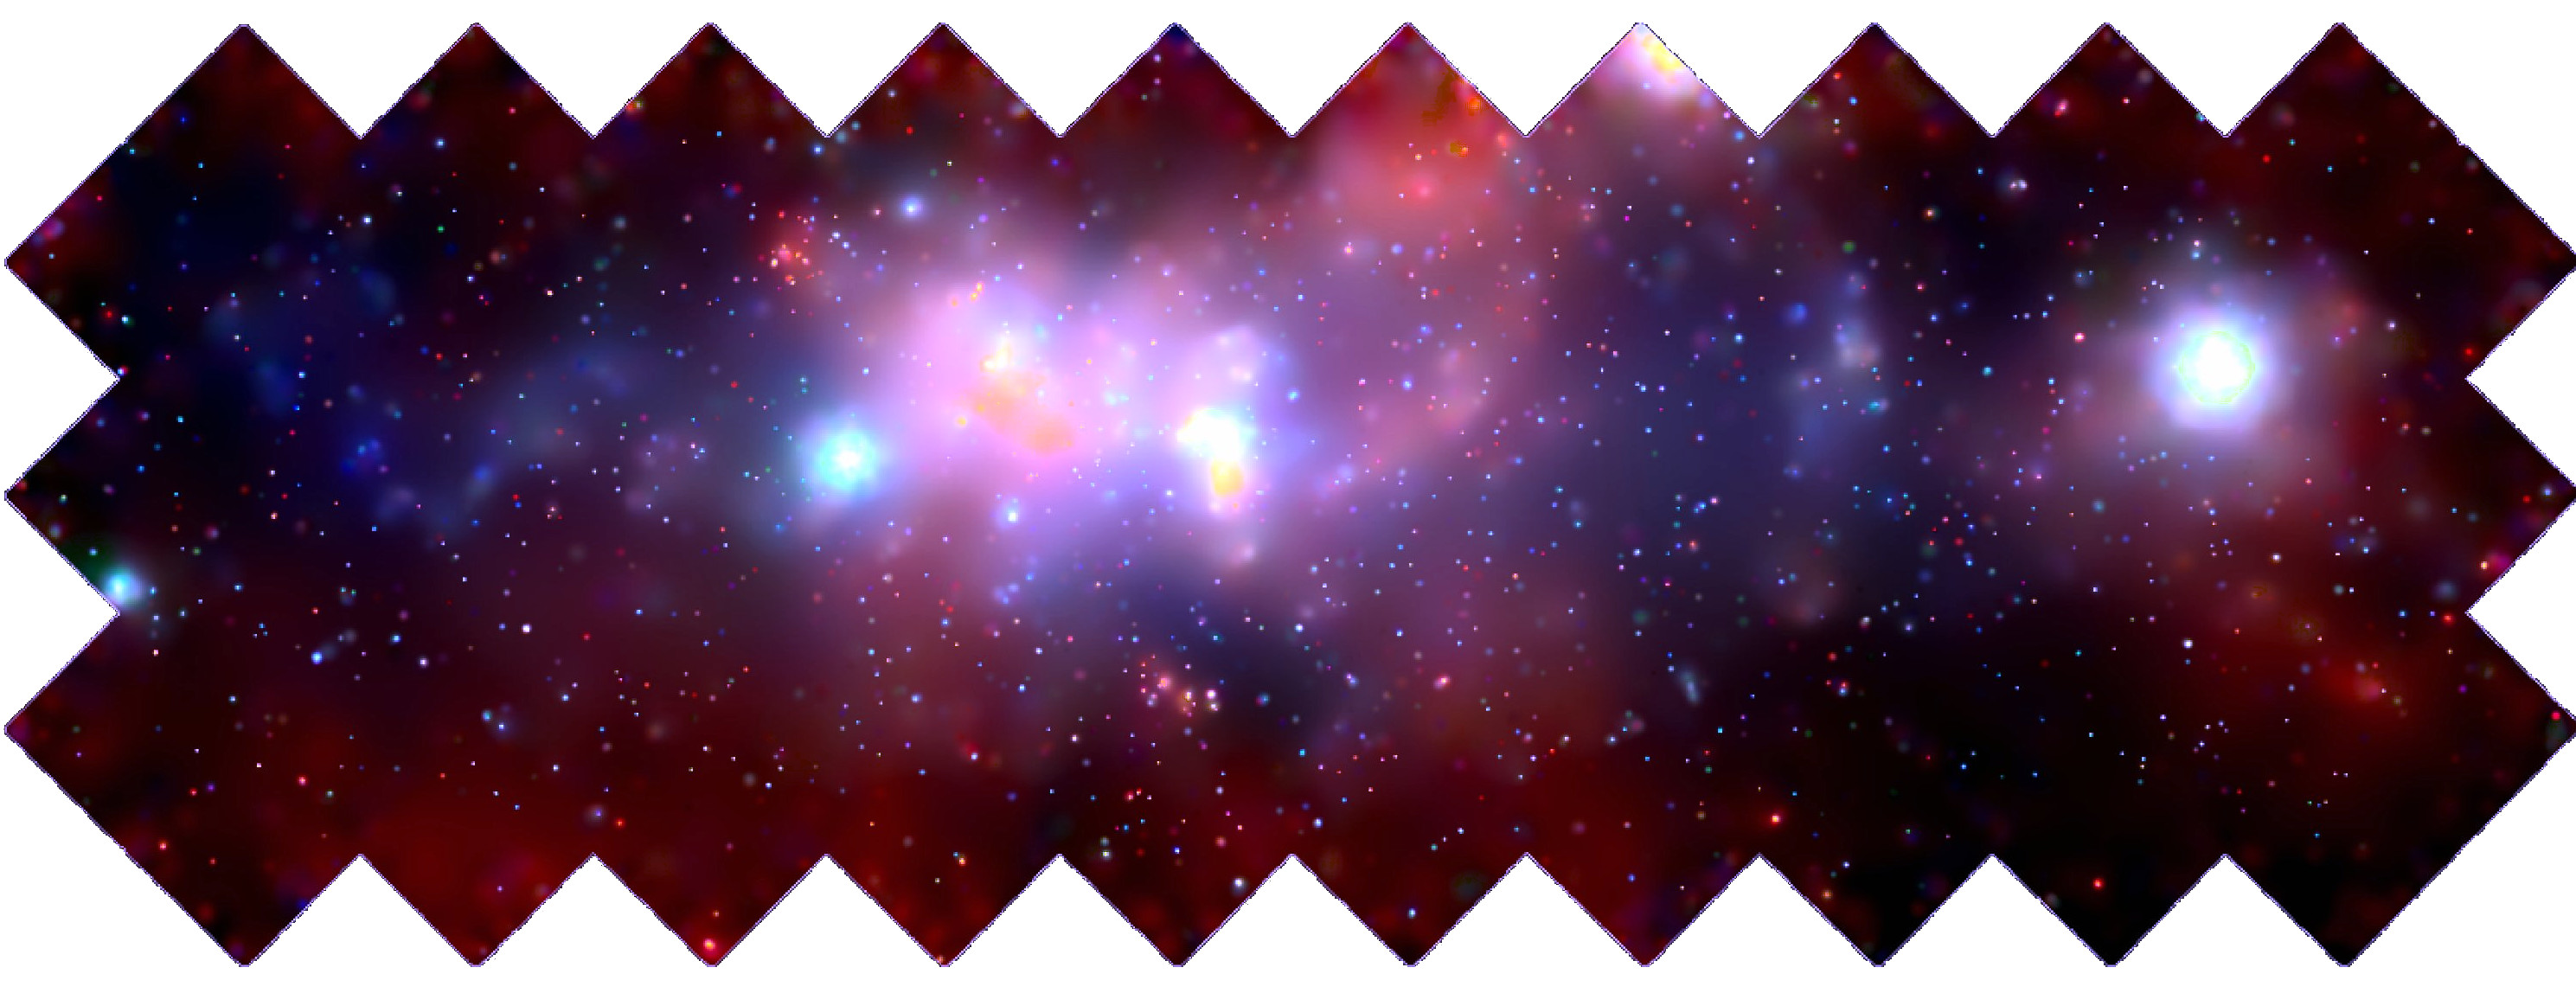 2978x1148 Description Milky Way Galaxy center Chandra transparentBackground.png